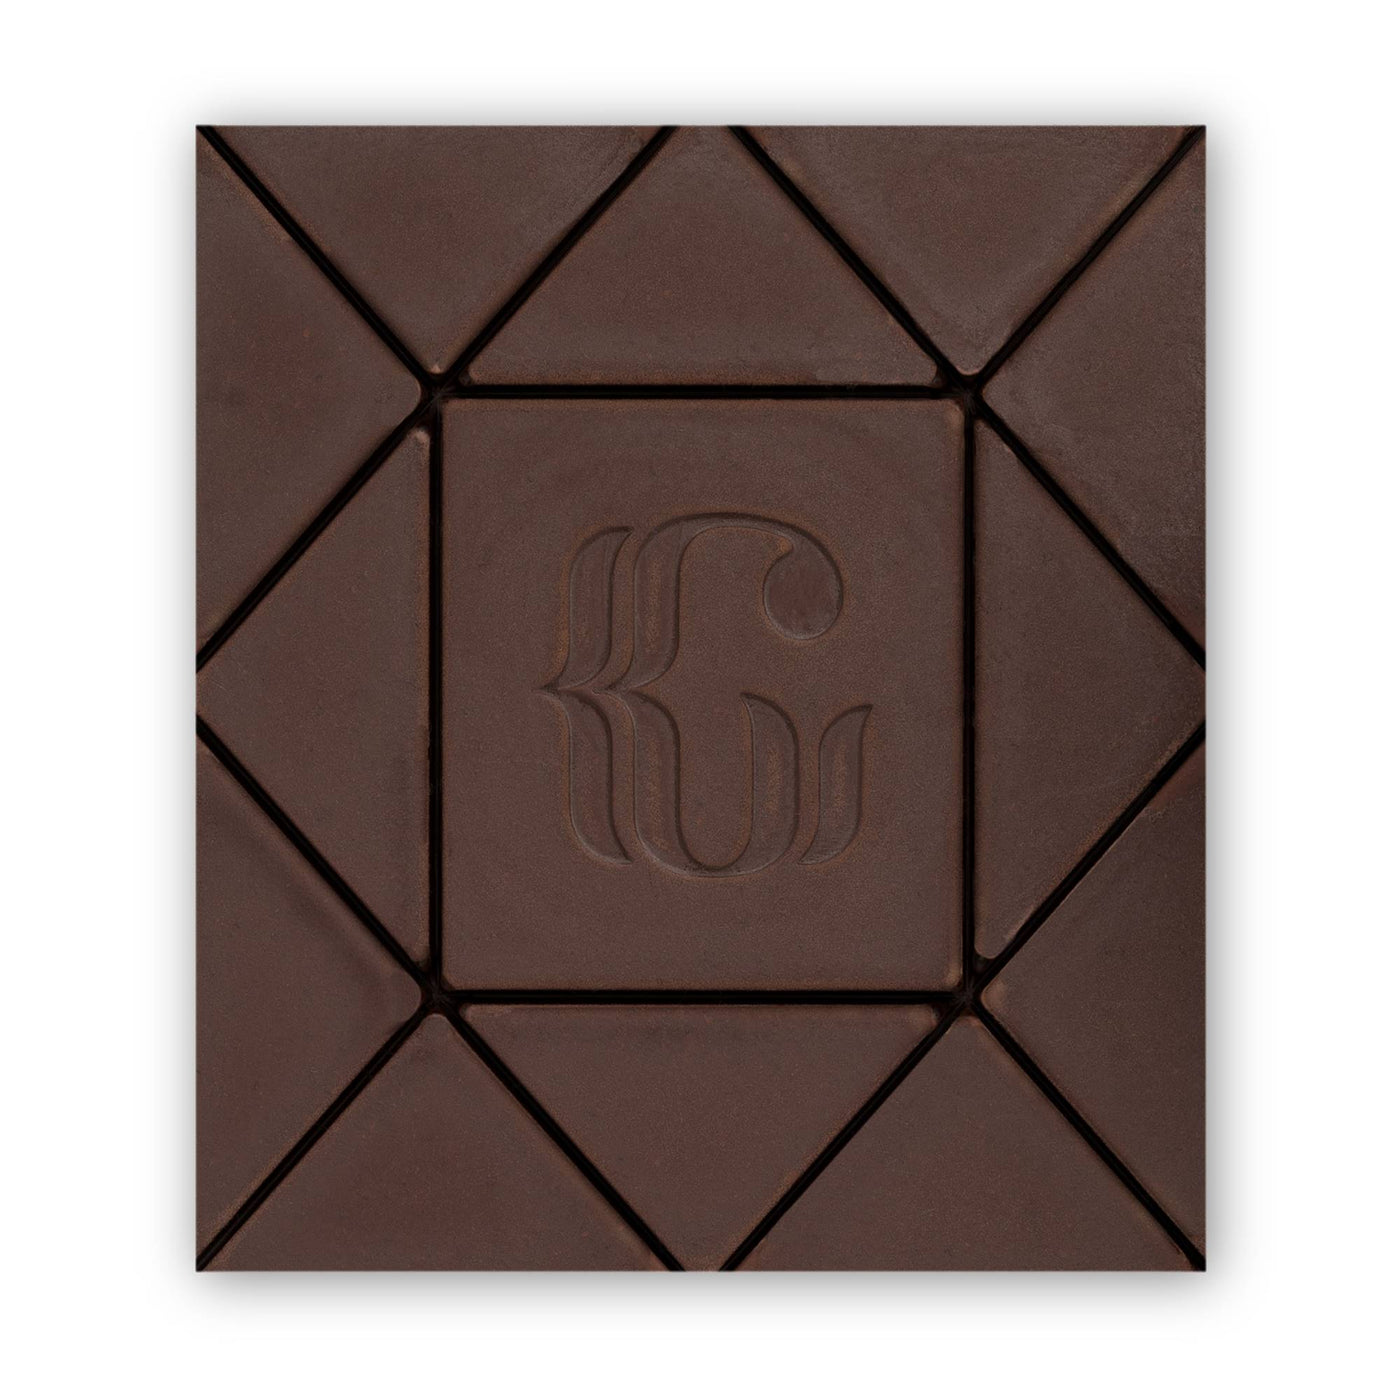 Goodio Organic Raw Chocolate With Liquorice & Sea Buckthorn - 48g